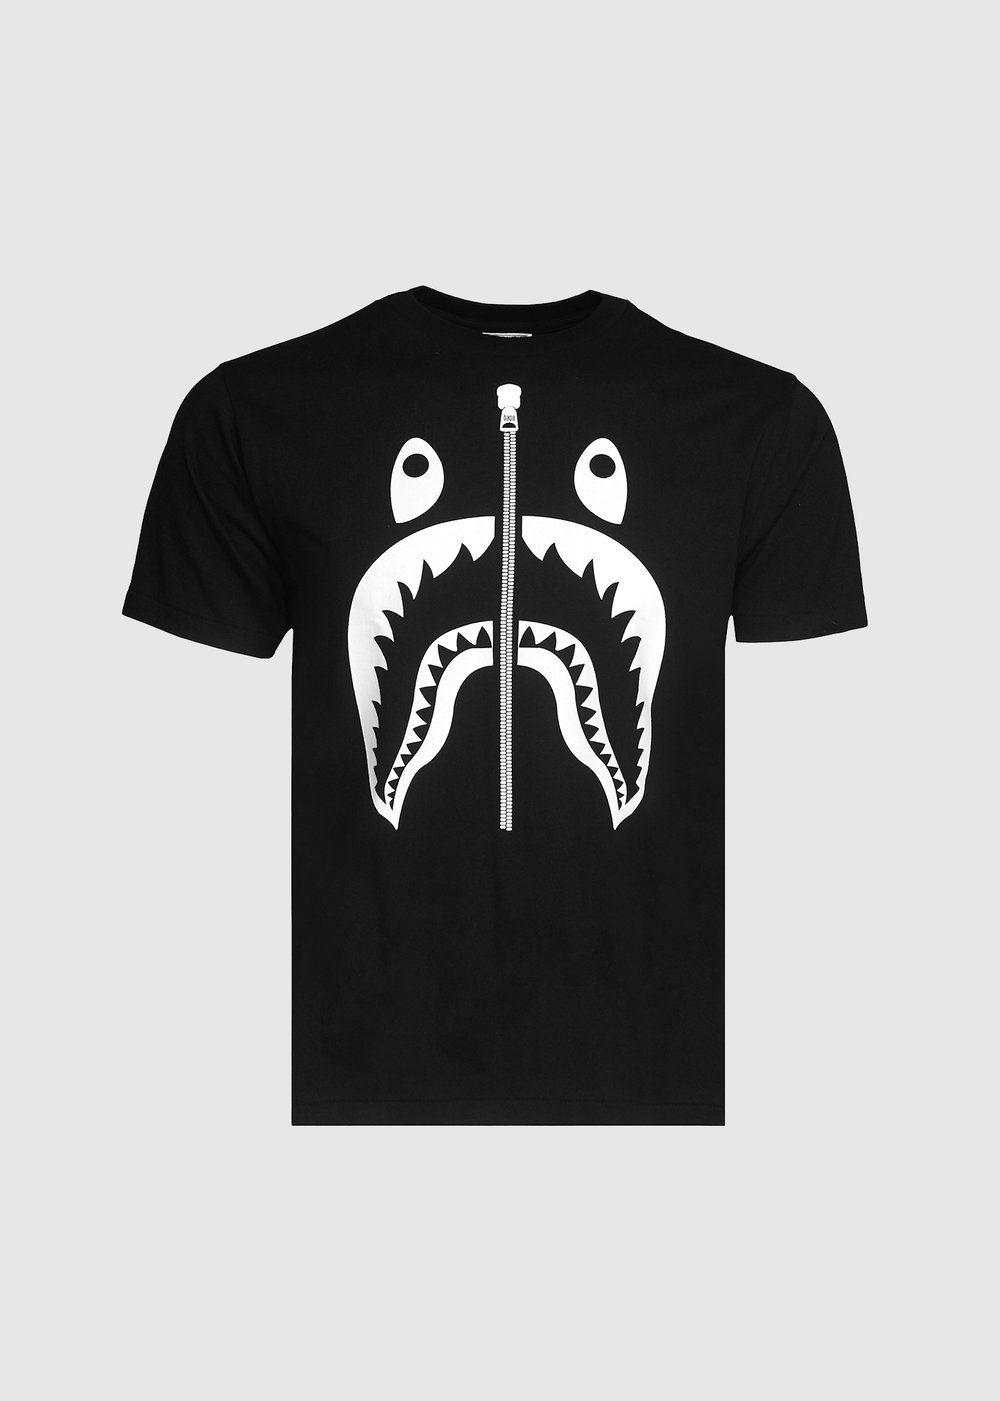 Black and White BAPE Shark Logo - Bape: Zipper Shark Tee [Black] – Social Status